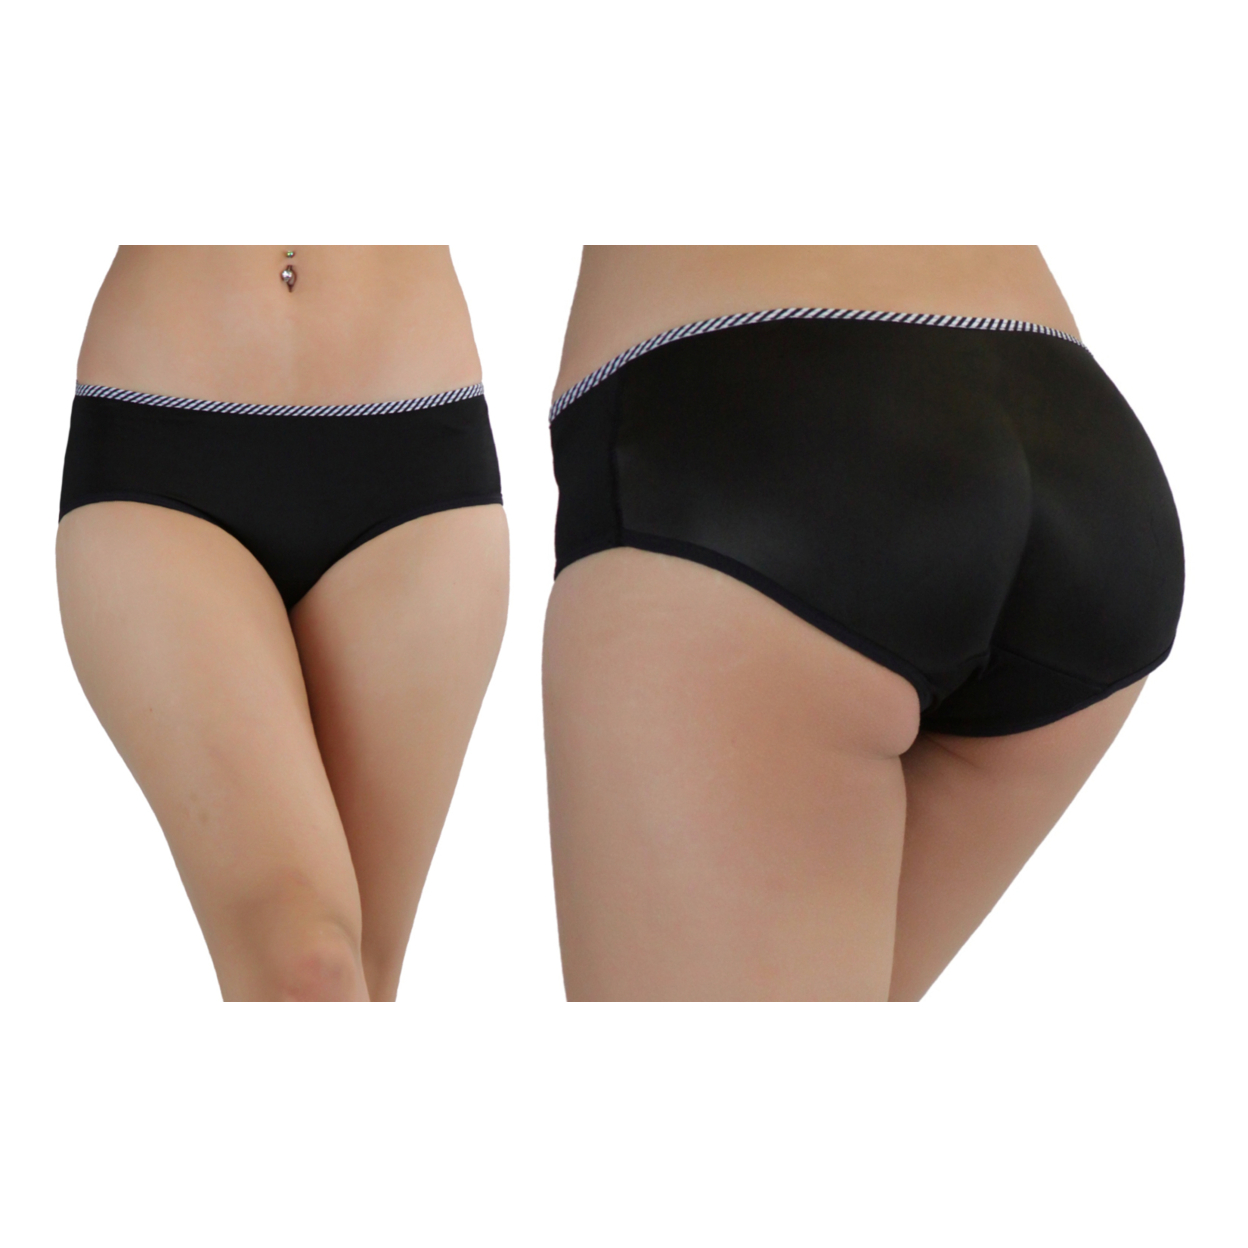 Women's Low-Rise Padded Panties - Beige, XL